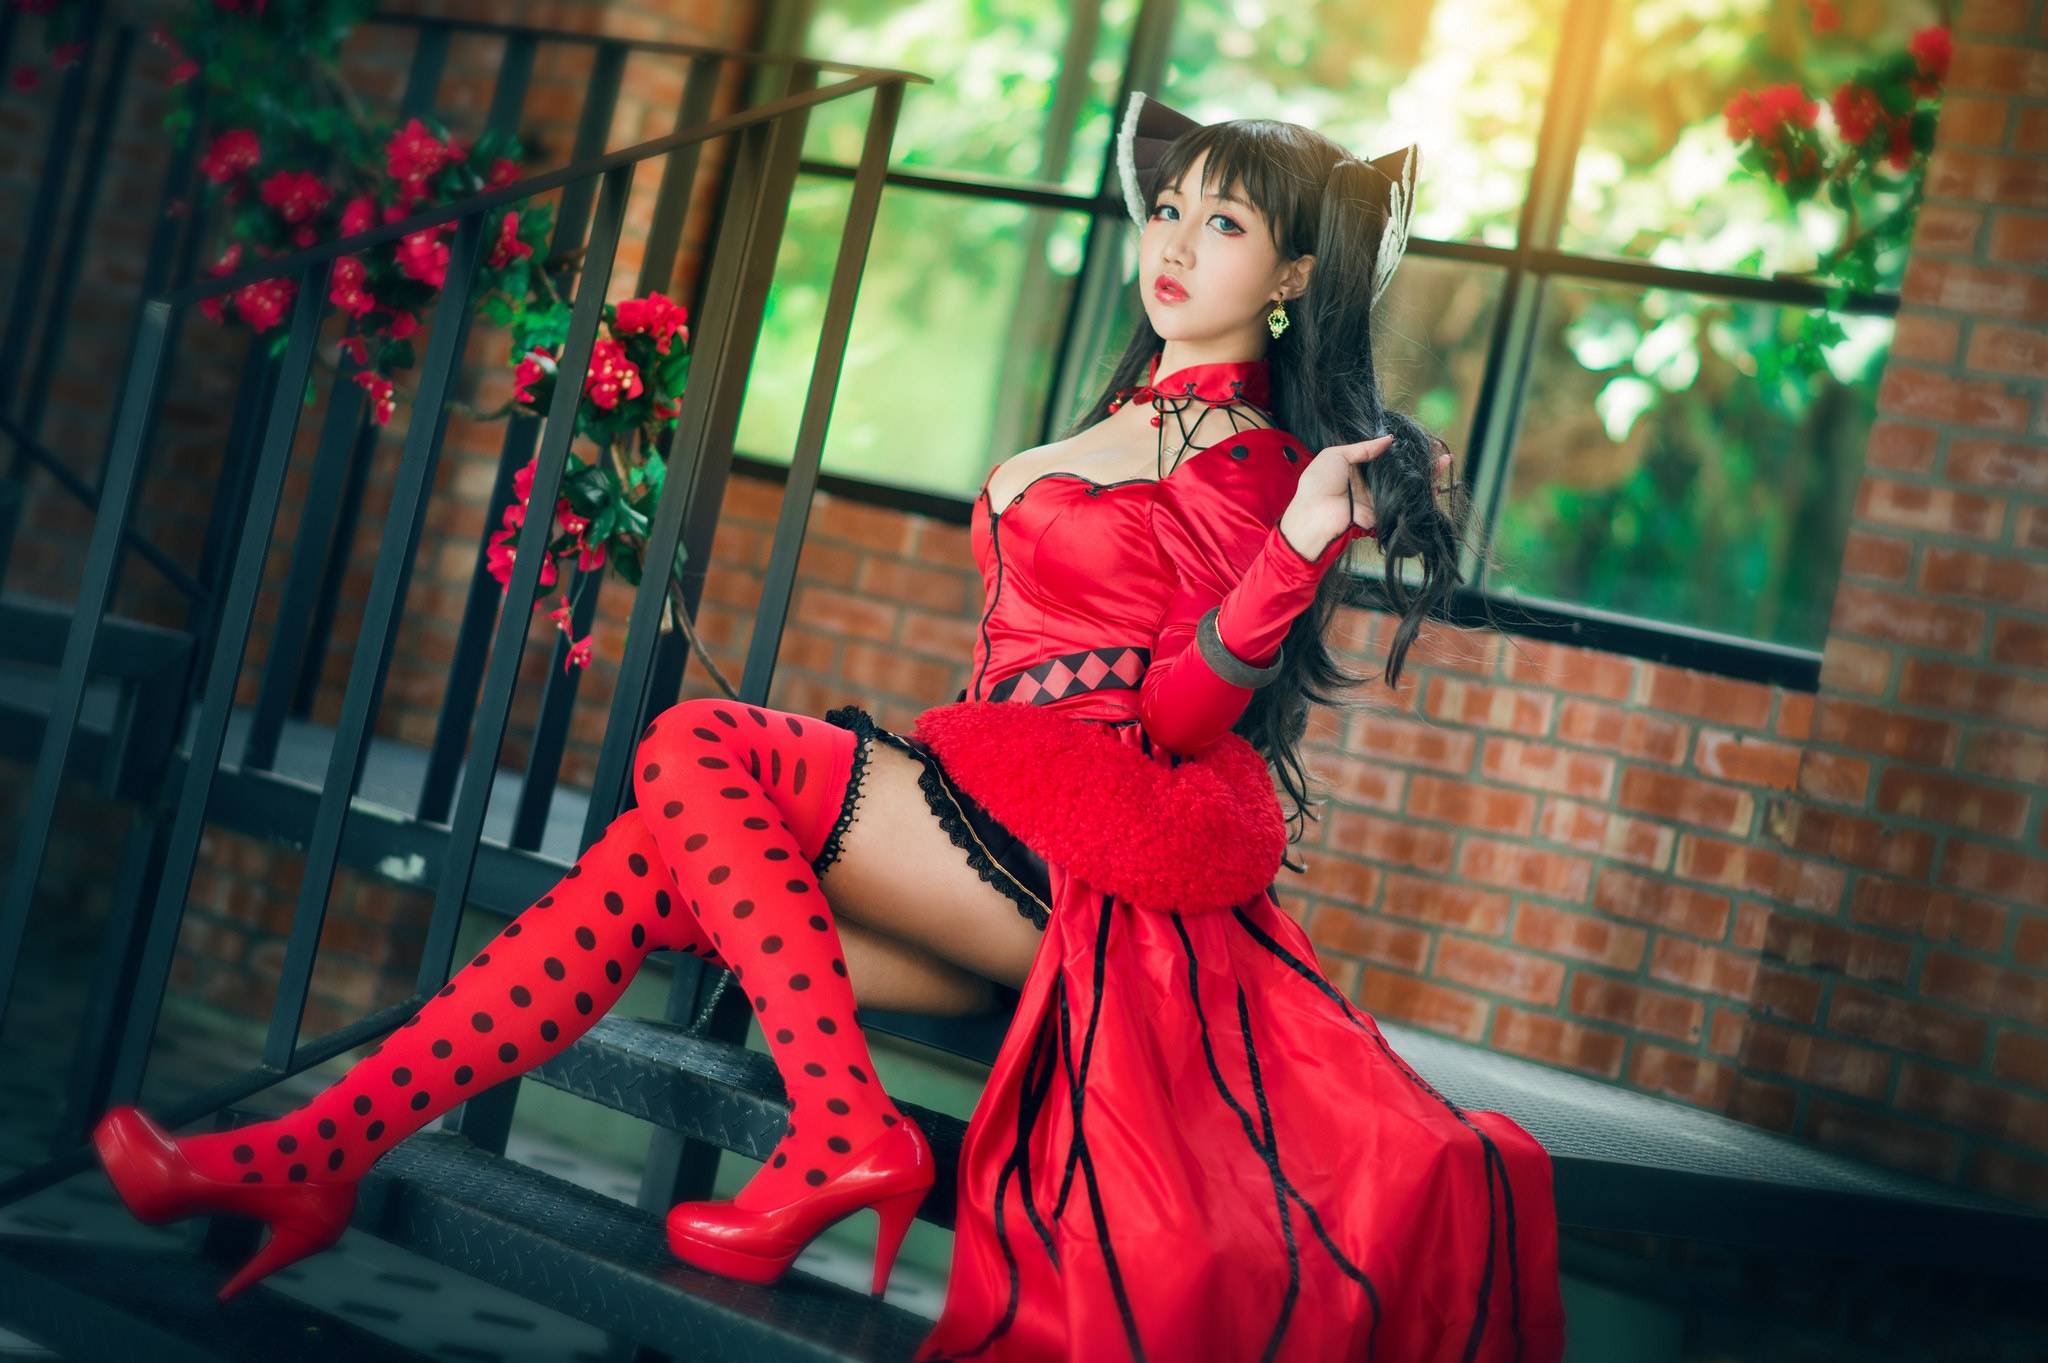 Asian Model Women Long Hair Dark Hair Cosplay Twintails Red Heels Knee High Socks Red Dress Flowers  2048x1363